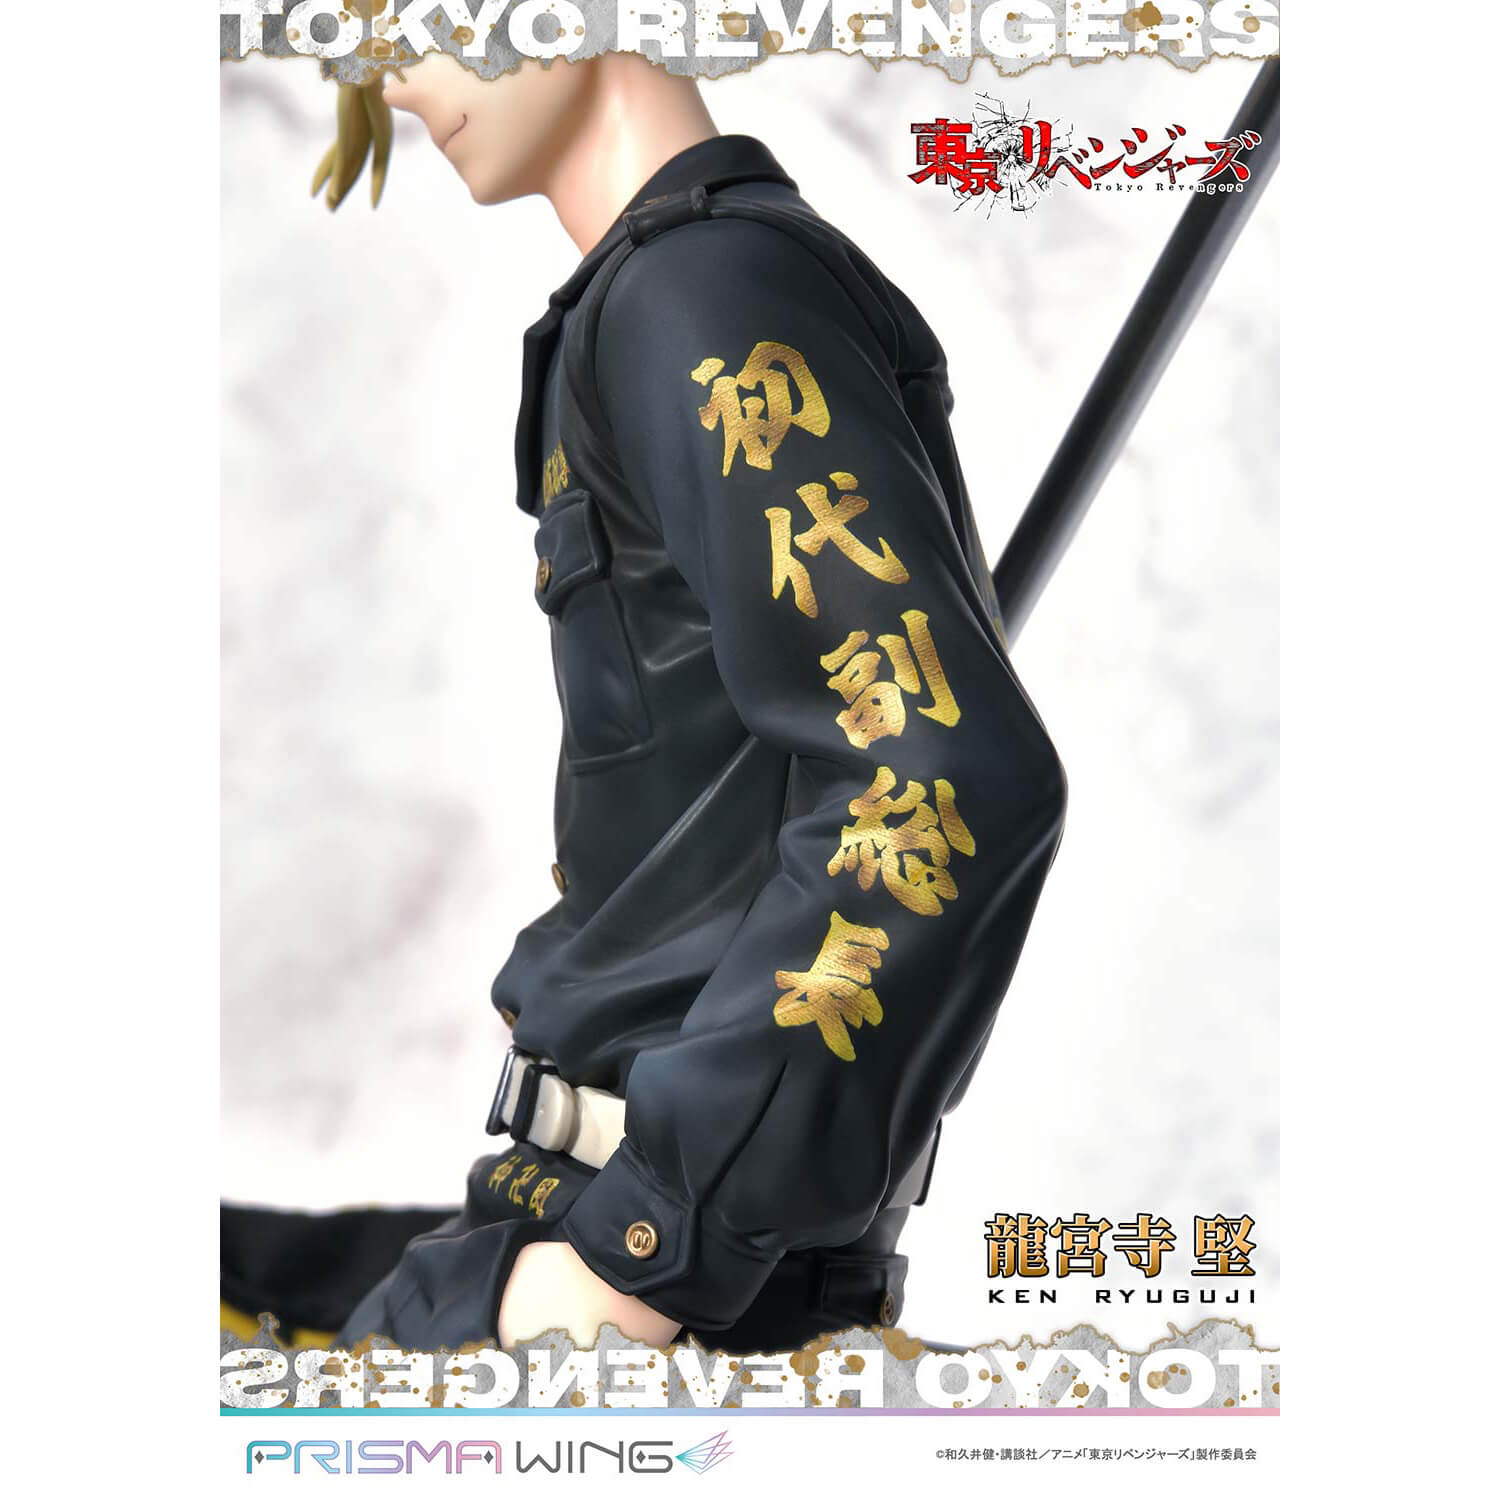 PRISMA WING "Tokyo Revengers" Ryuguji Ken 1/7 Scale Figure | animota